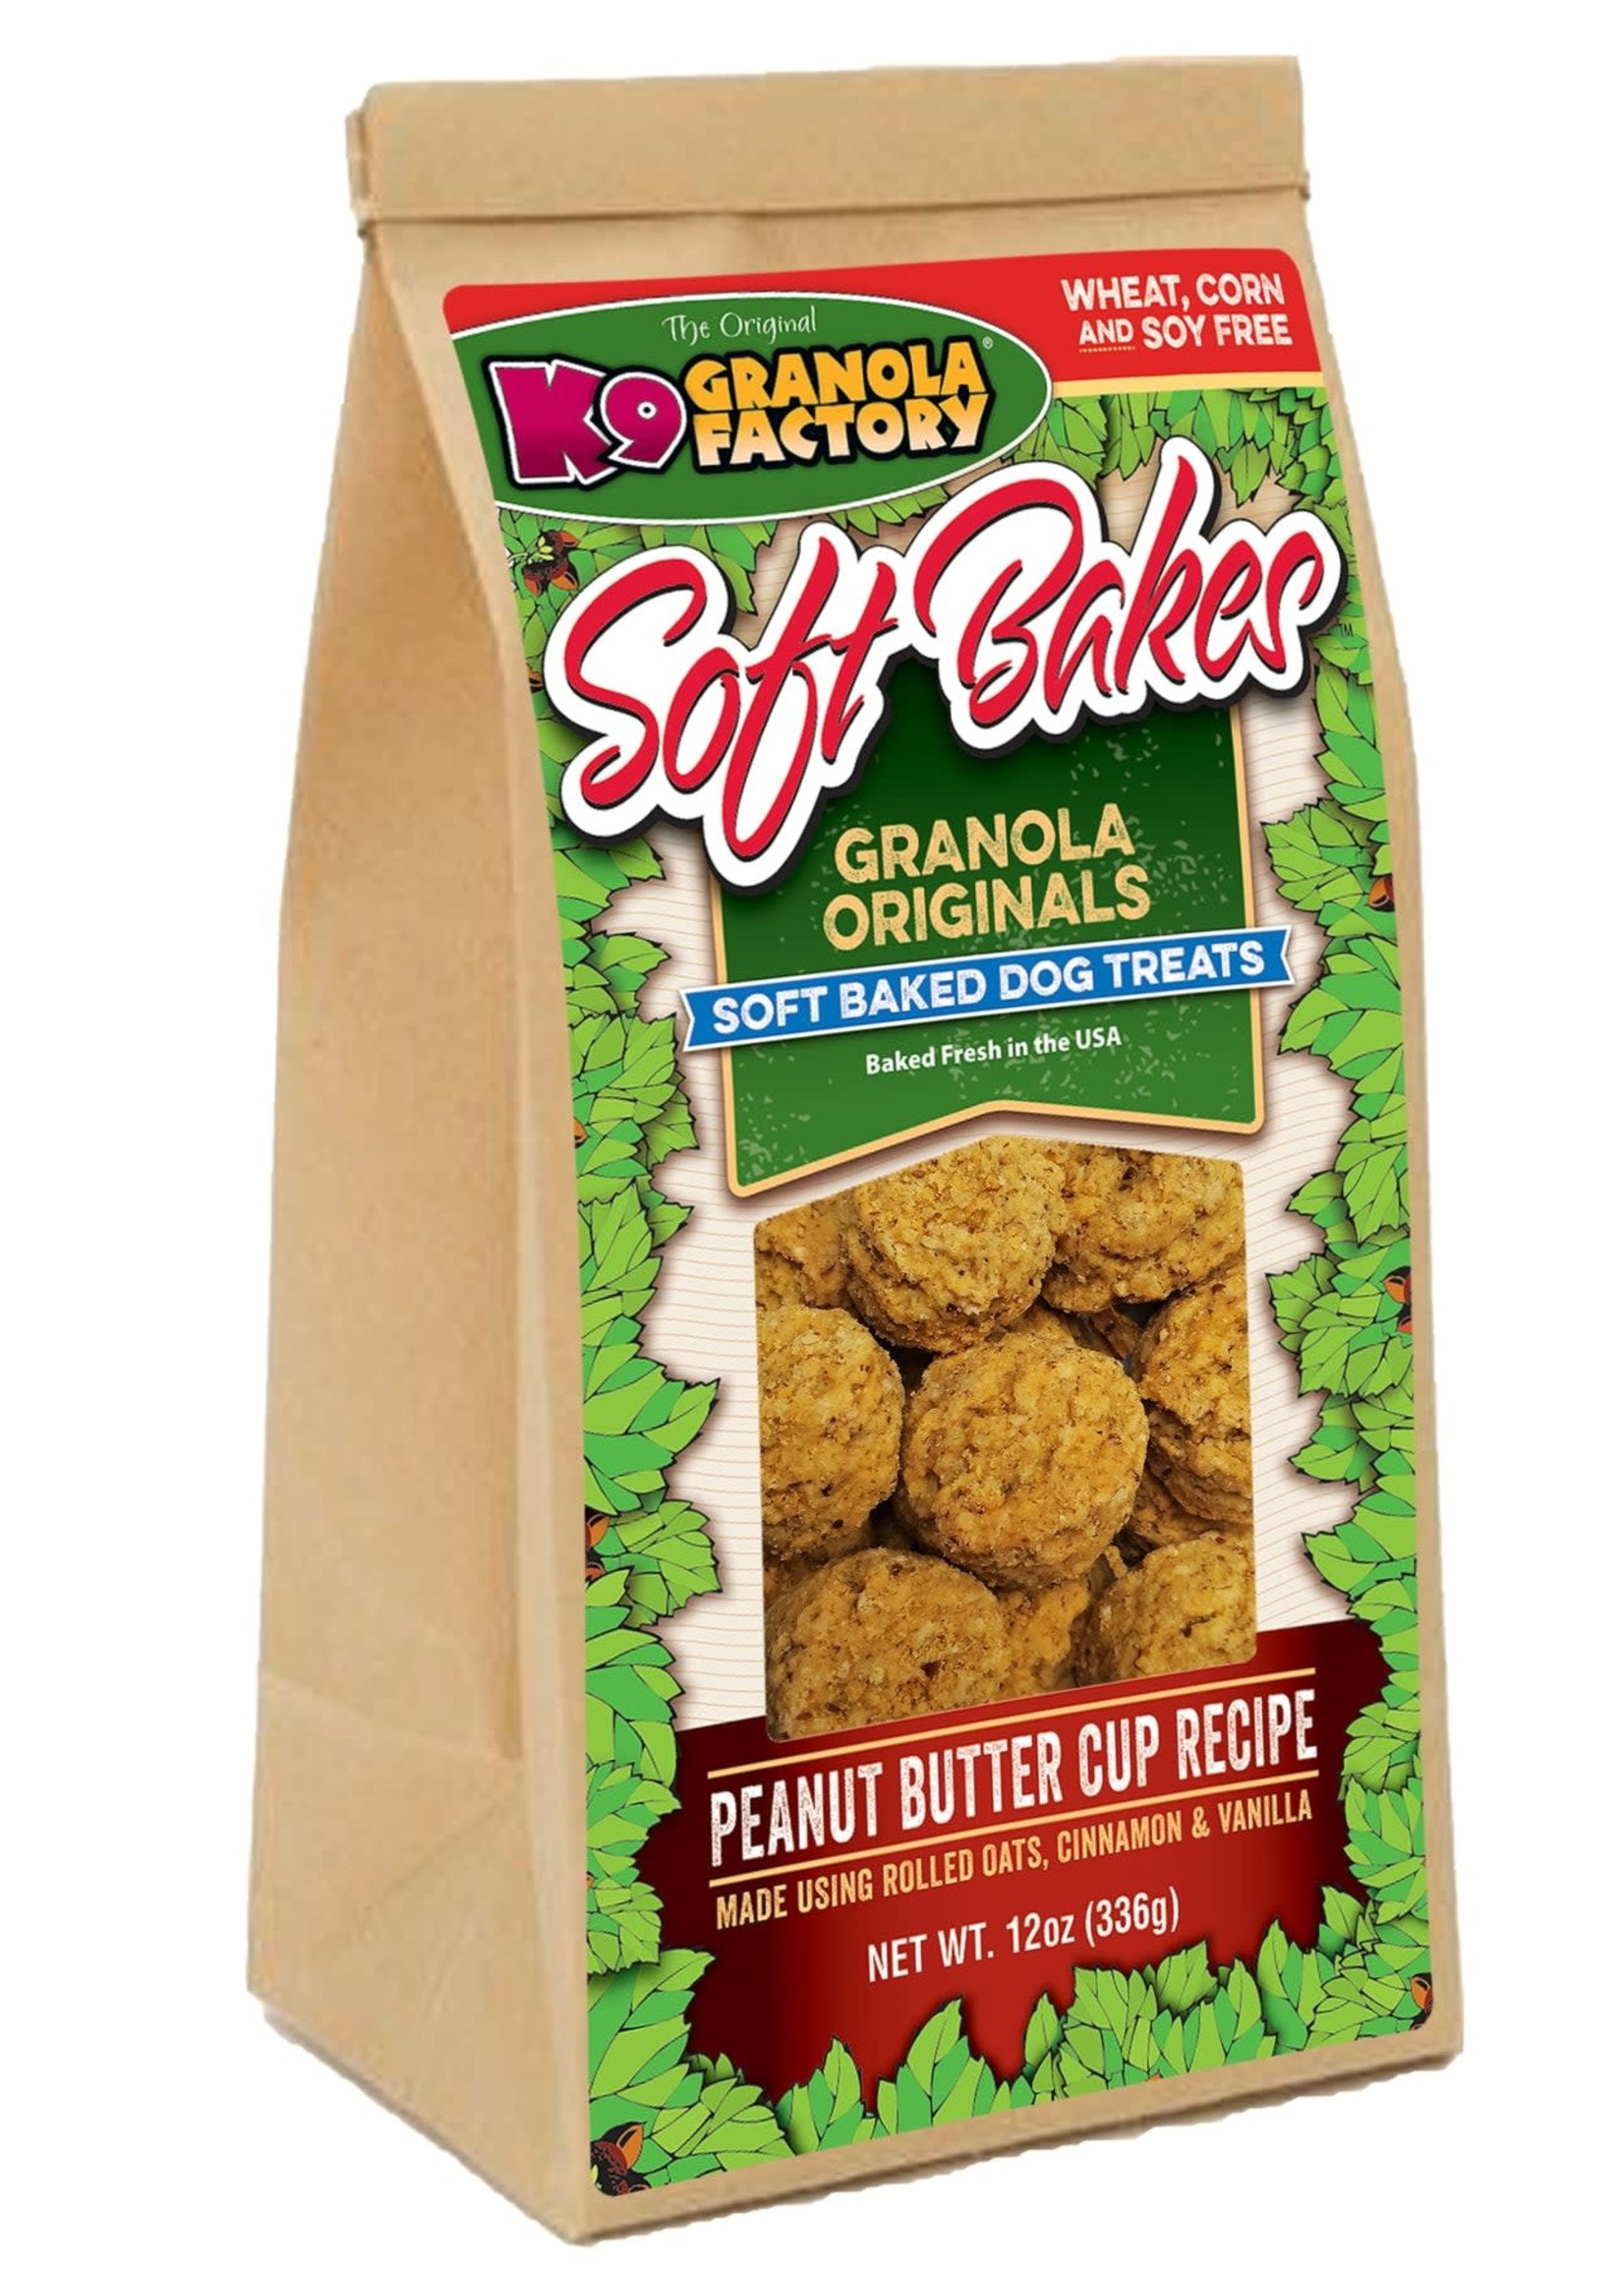 K9 Granola Factory Soft Bakes Peanut Butter Cup Dog Treats